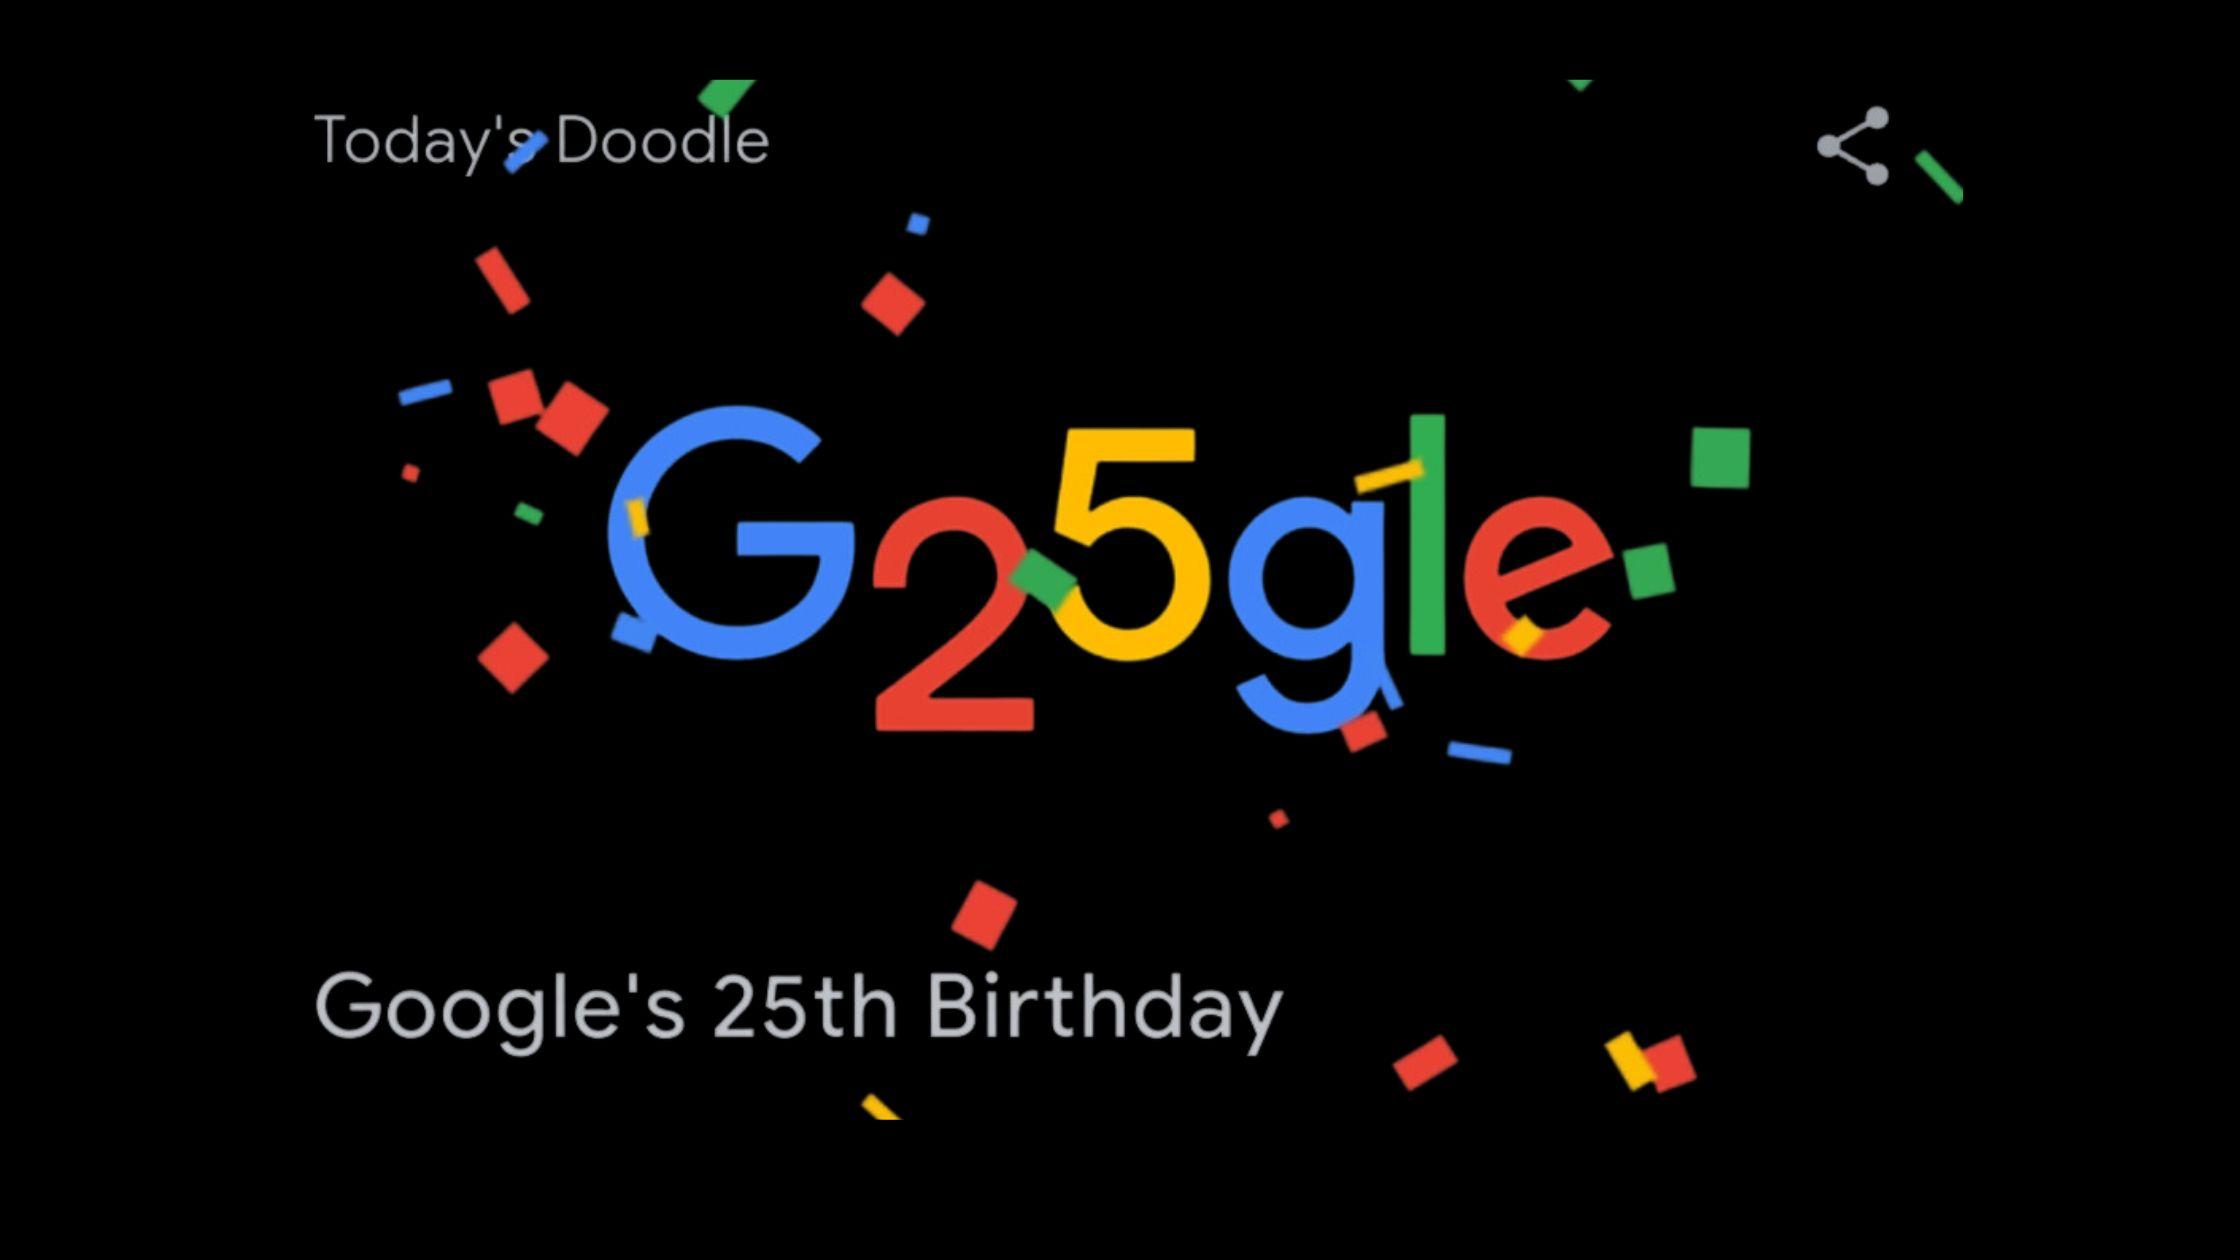 Google's 25th Birthday!